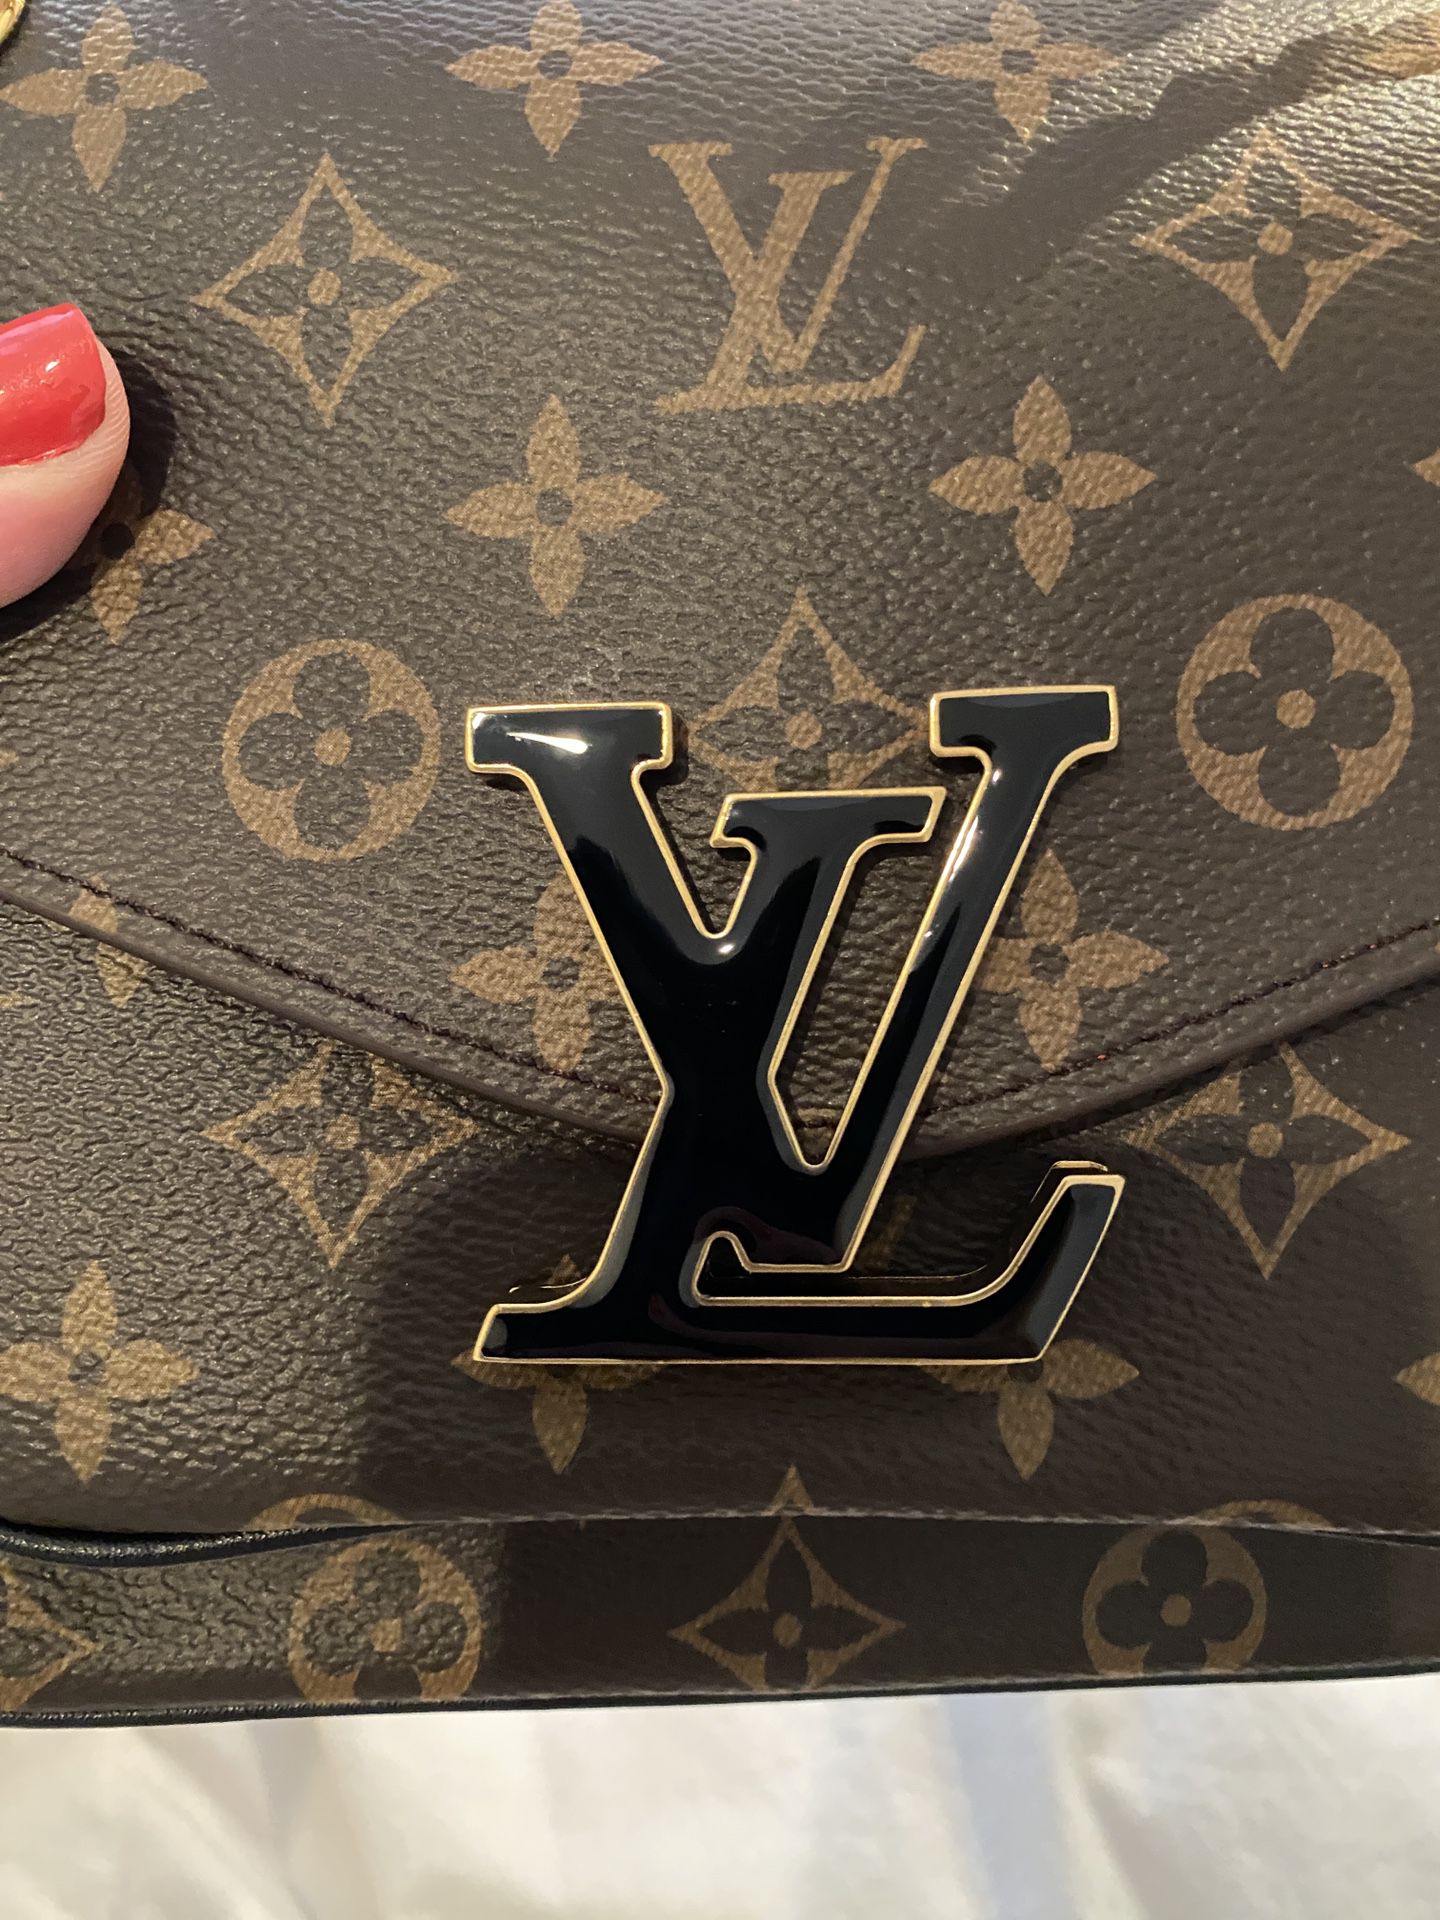 Louis Vuitton Monogram Passy Crossbody